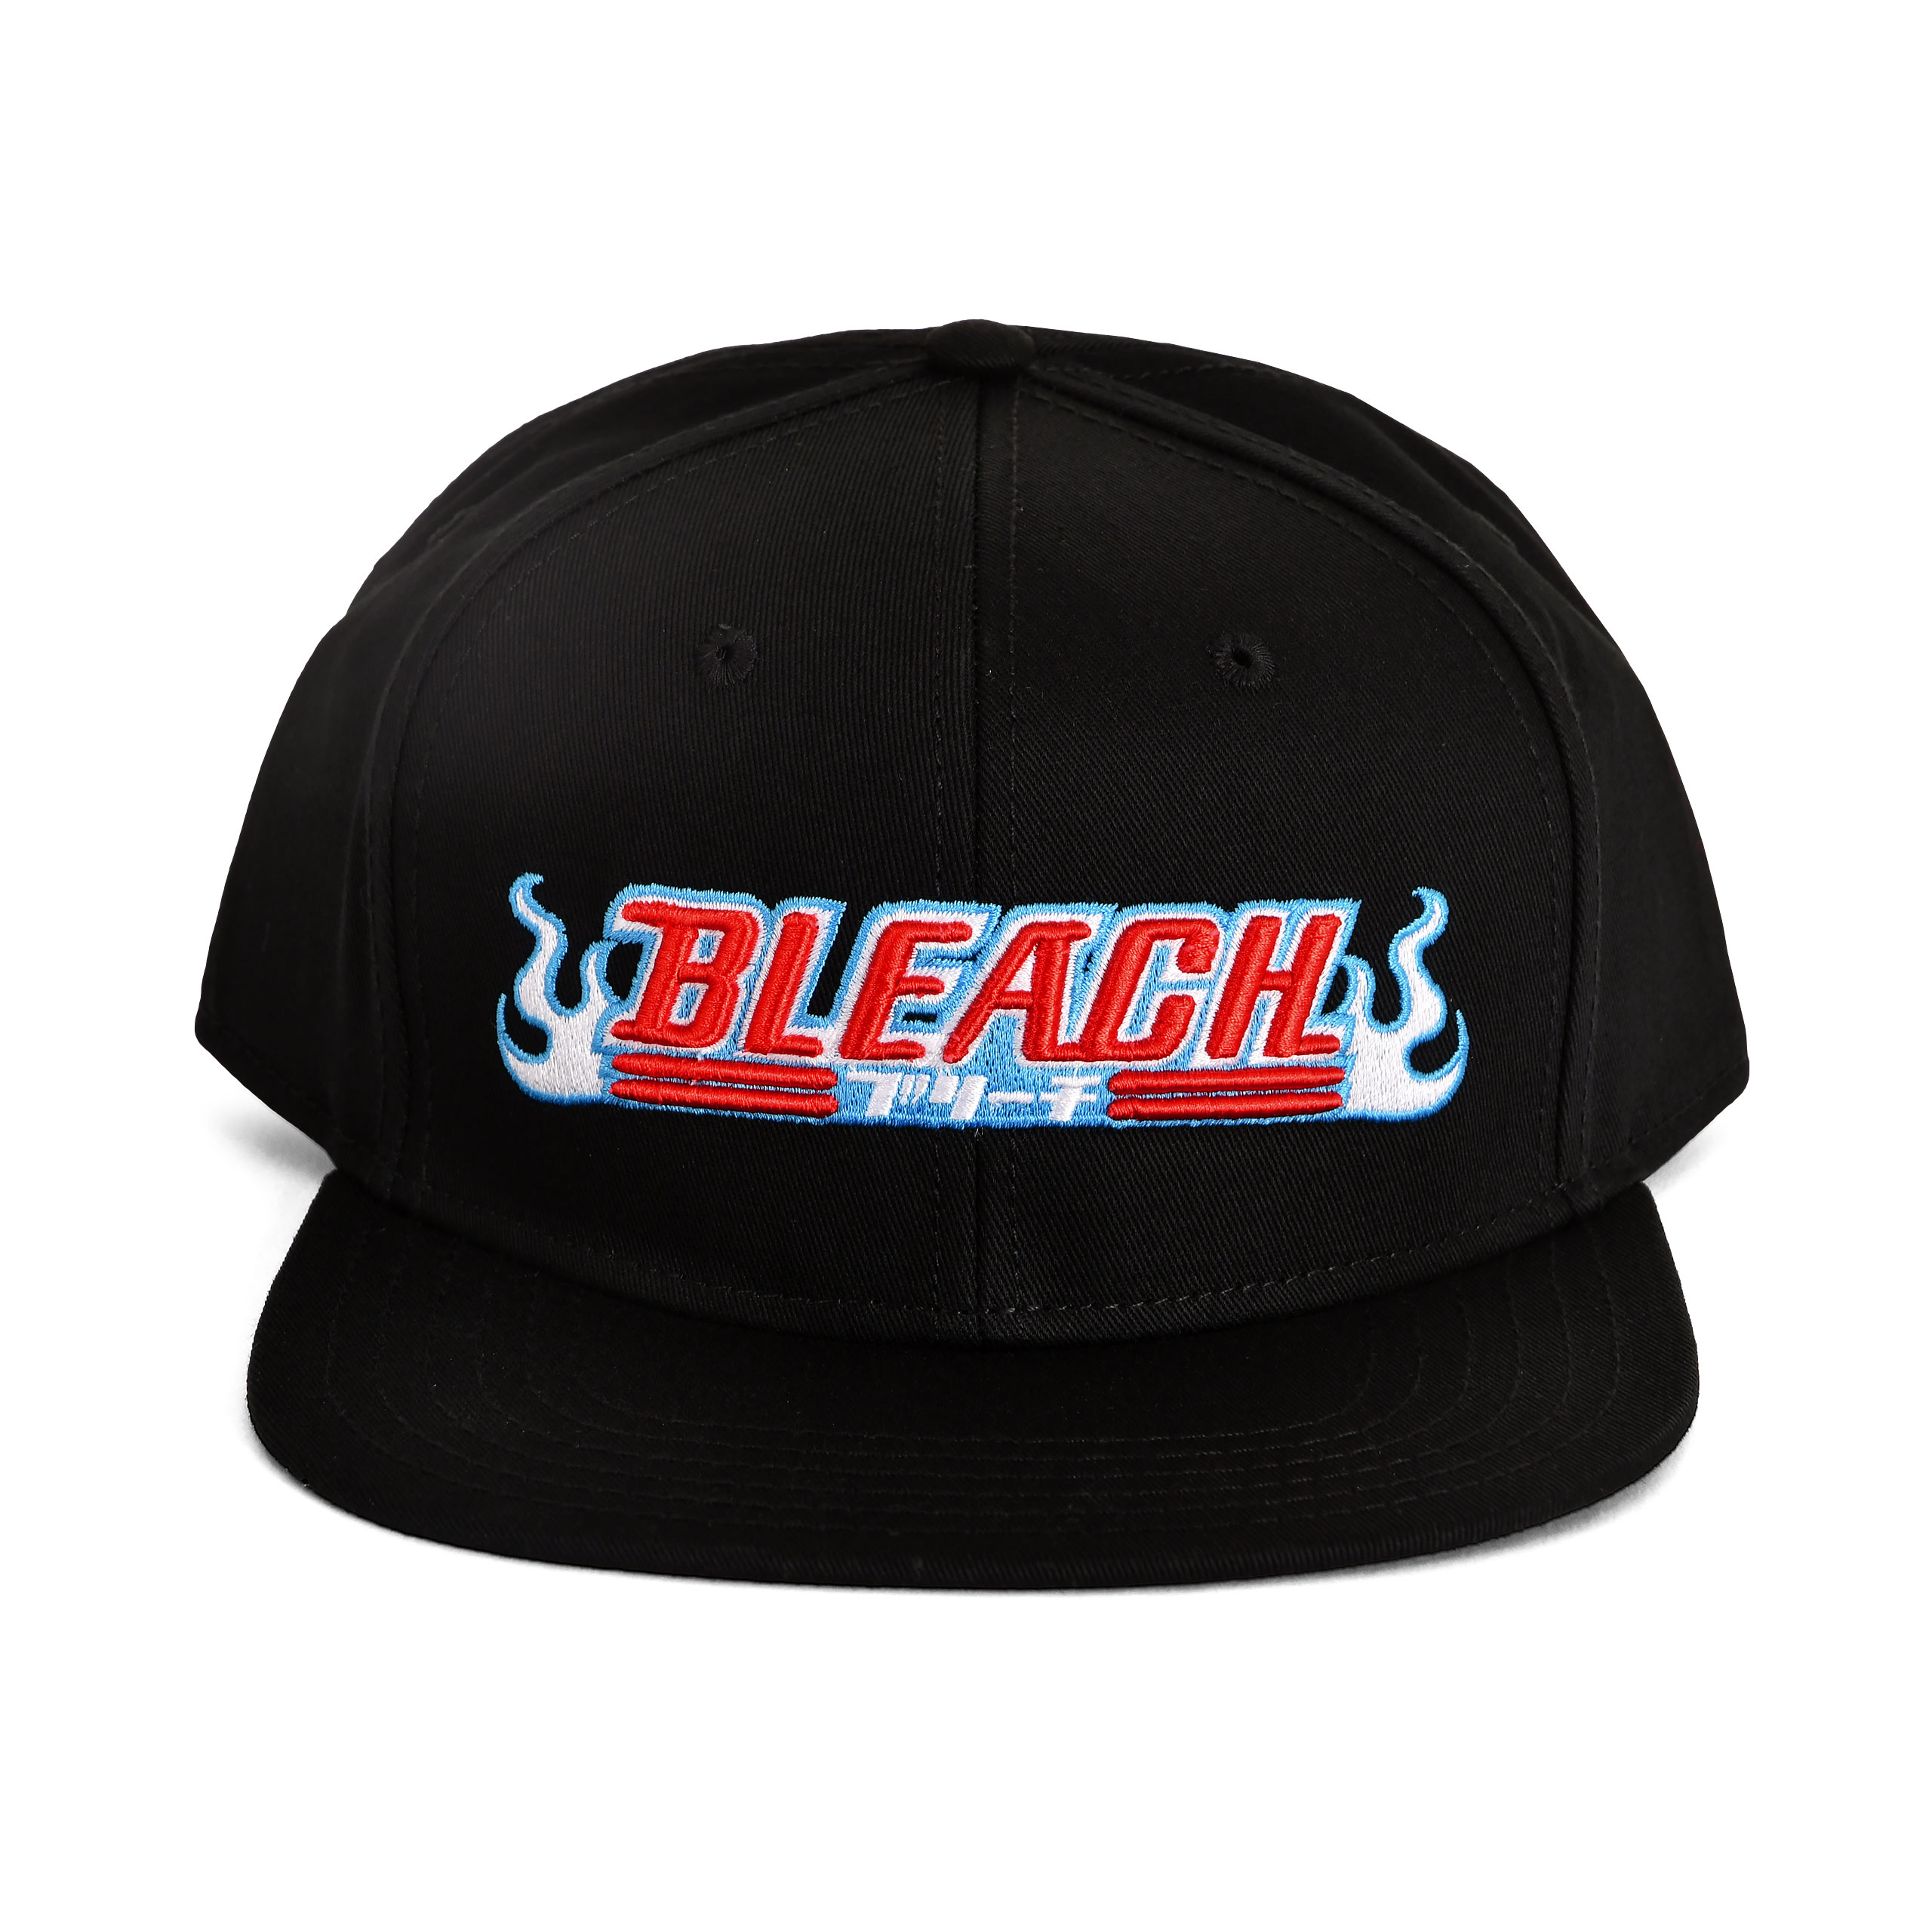 Bleach - Casquette Snapback Logo noir